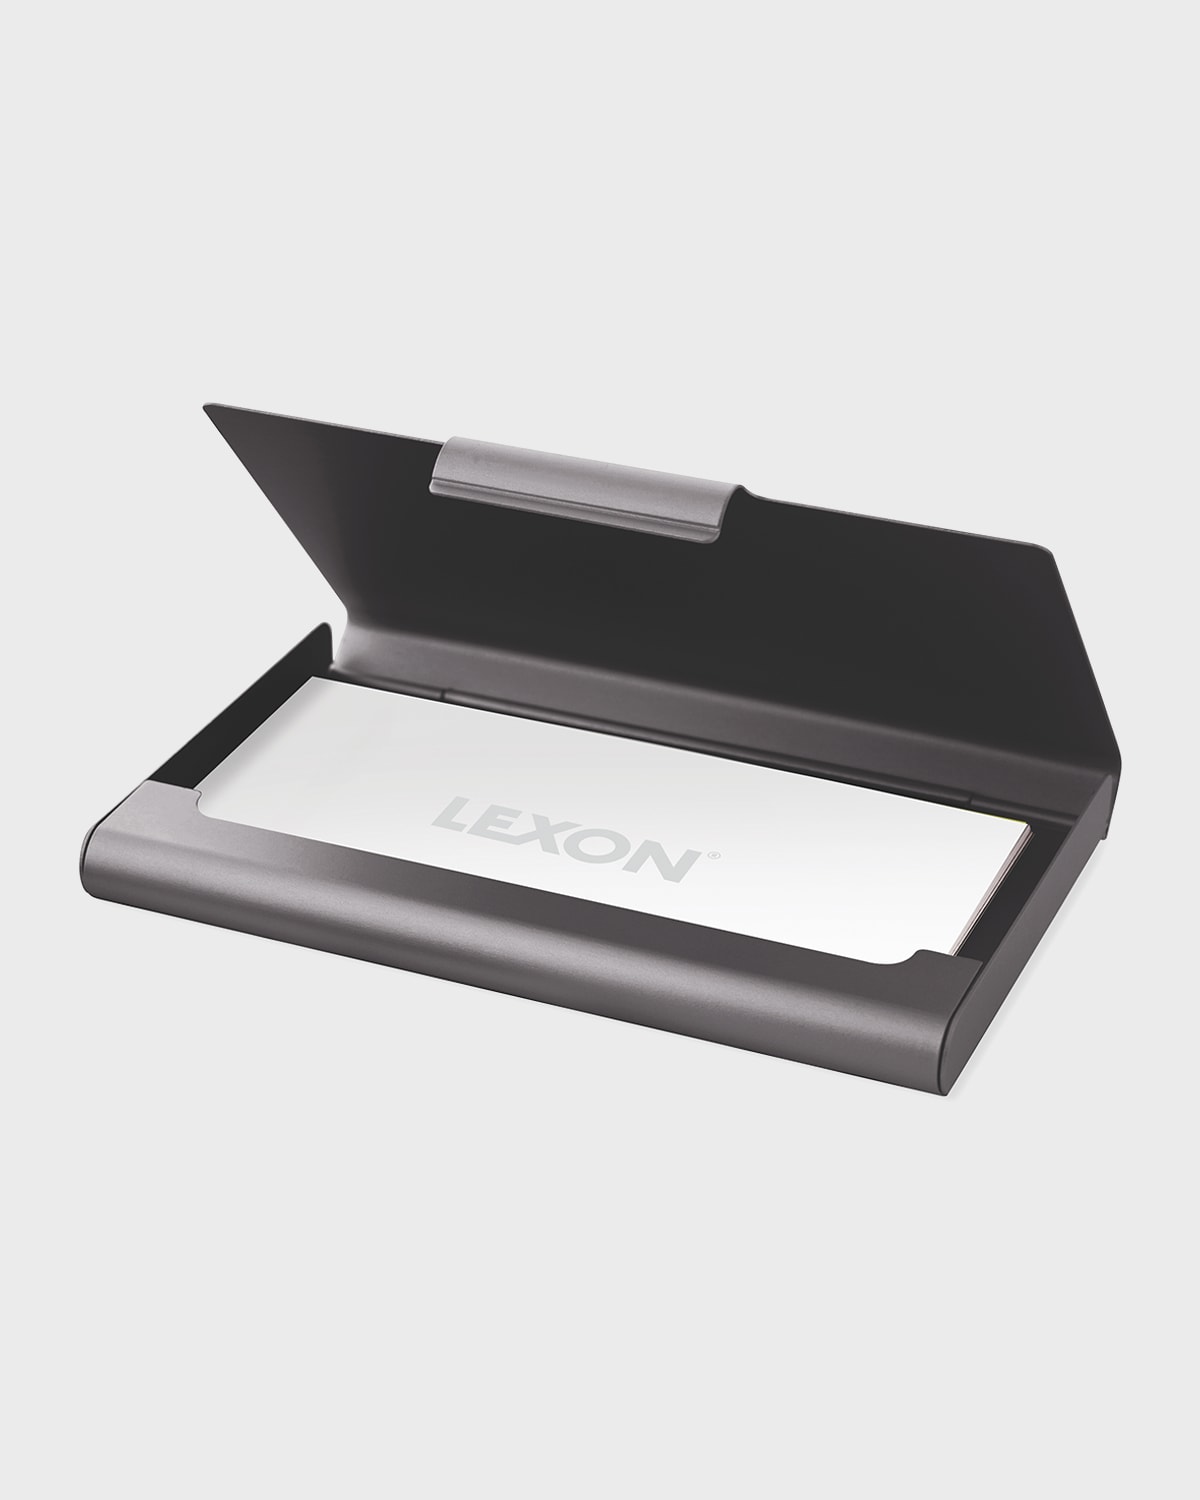 Lexon Design Business Card Box